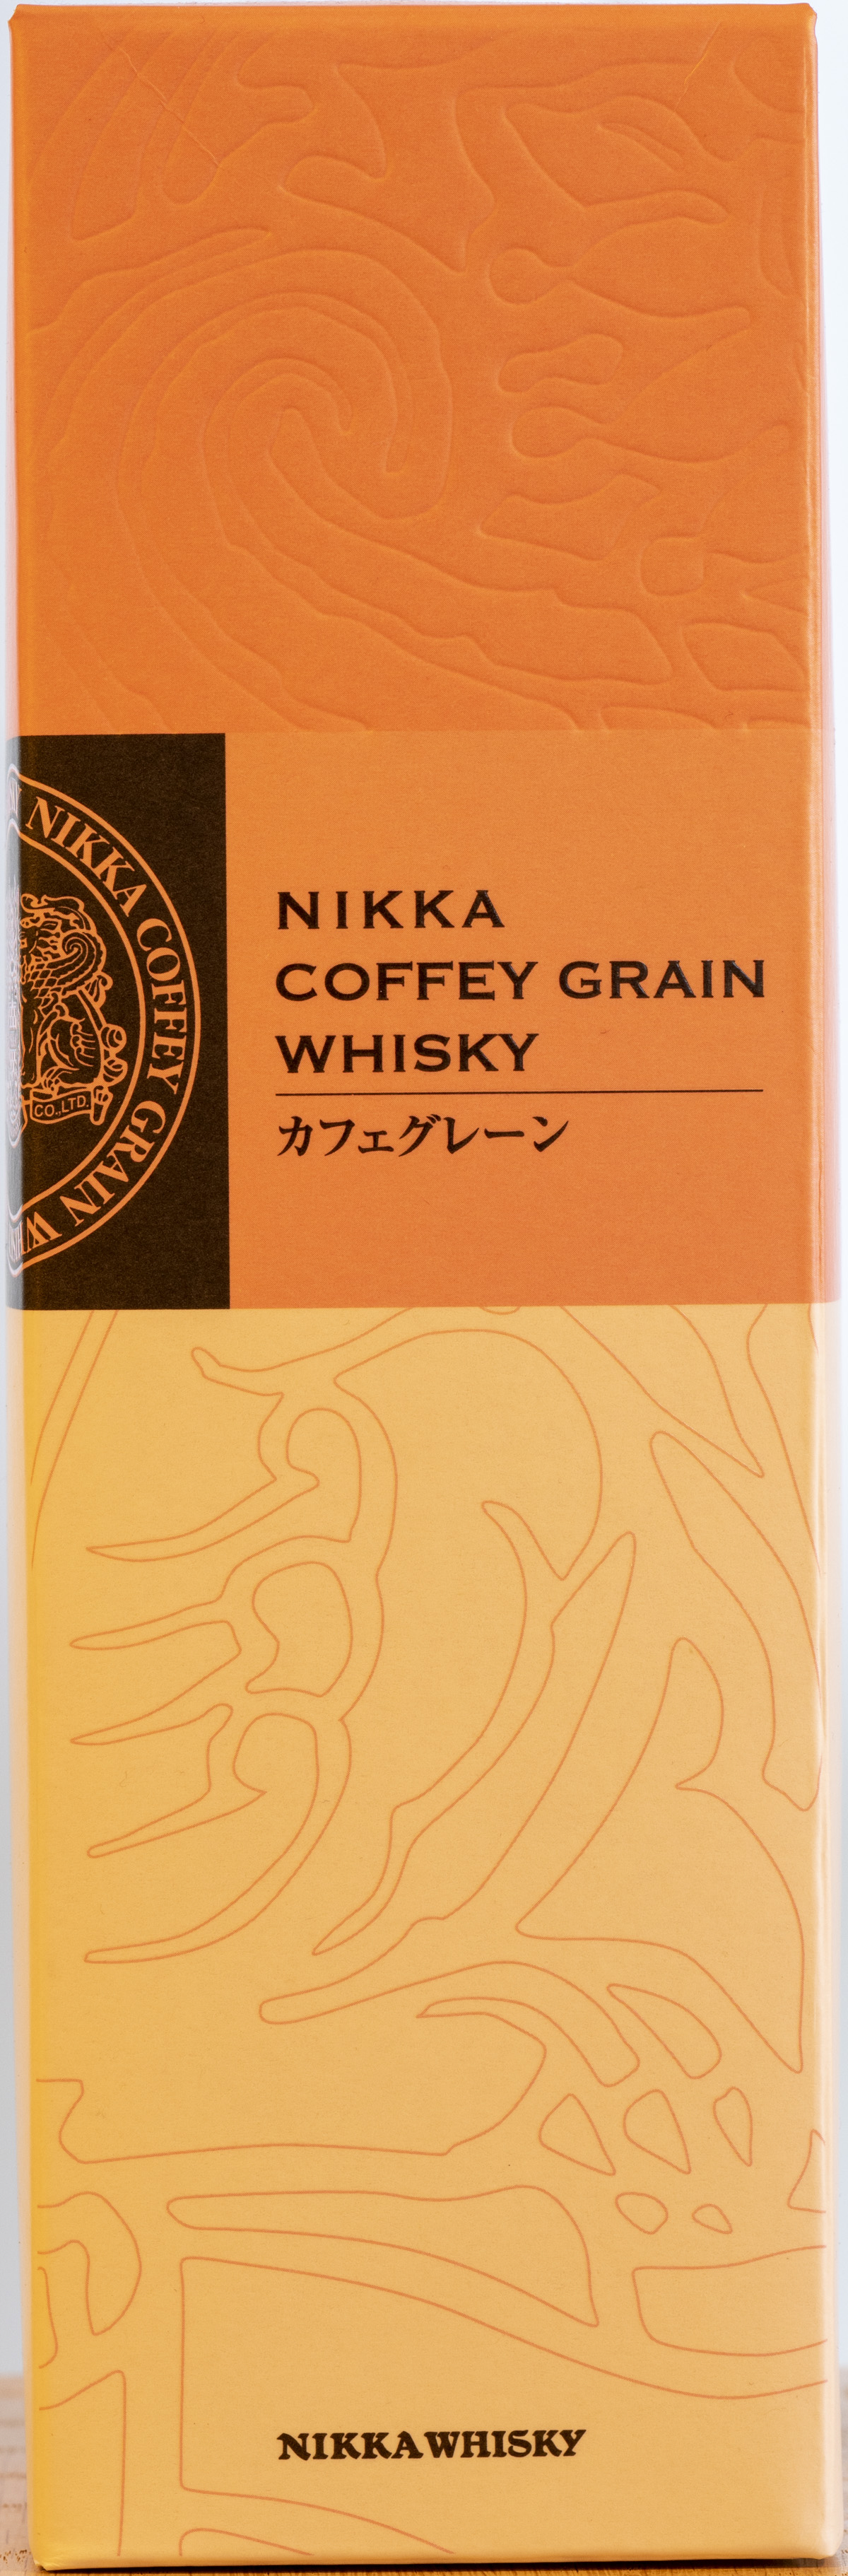 Billede: PHC_3949 - Nikka Coffey Grain Whisky - box front.jpg